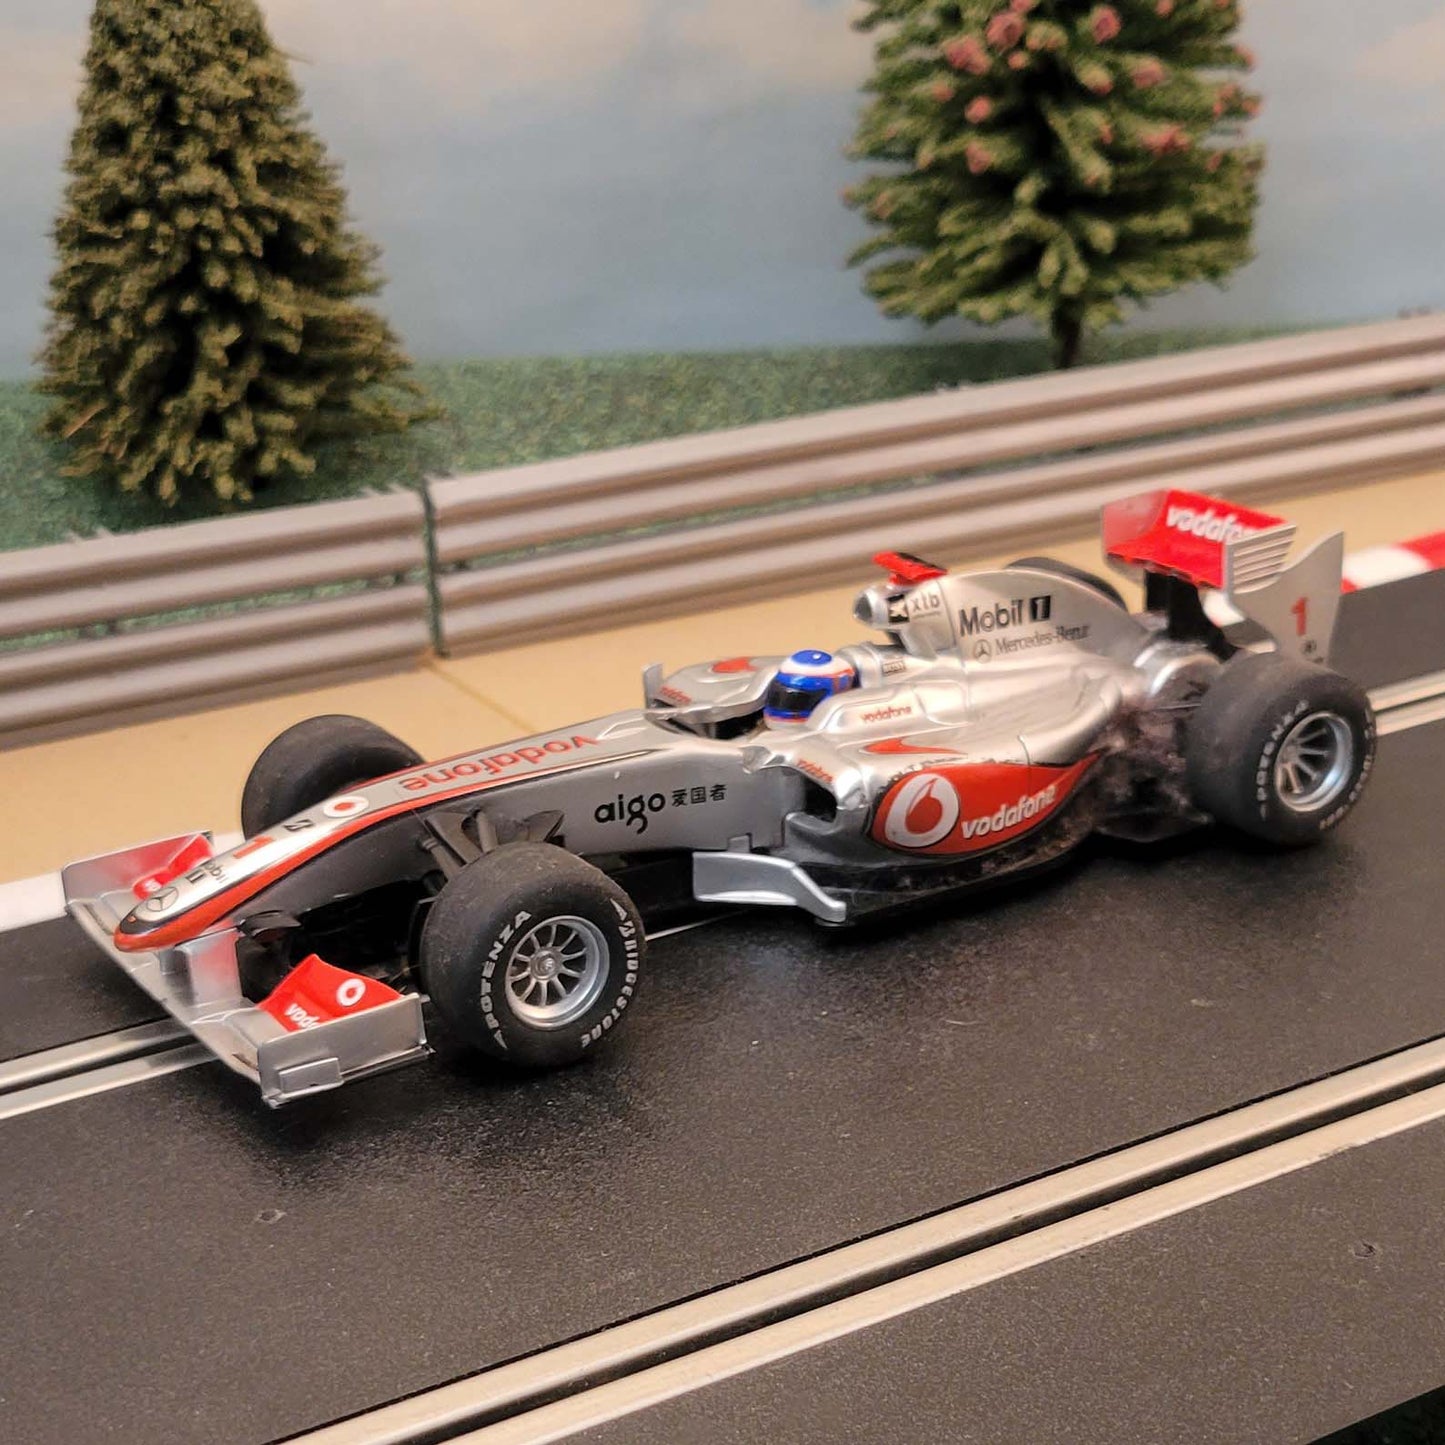 Scalextric 1:32 Car - C3046 F1 Vodafone MP4-24 Jenson Button #1 #Z